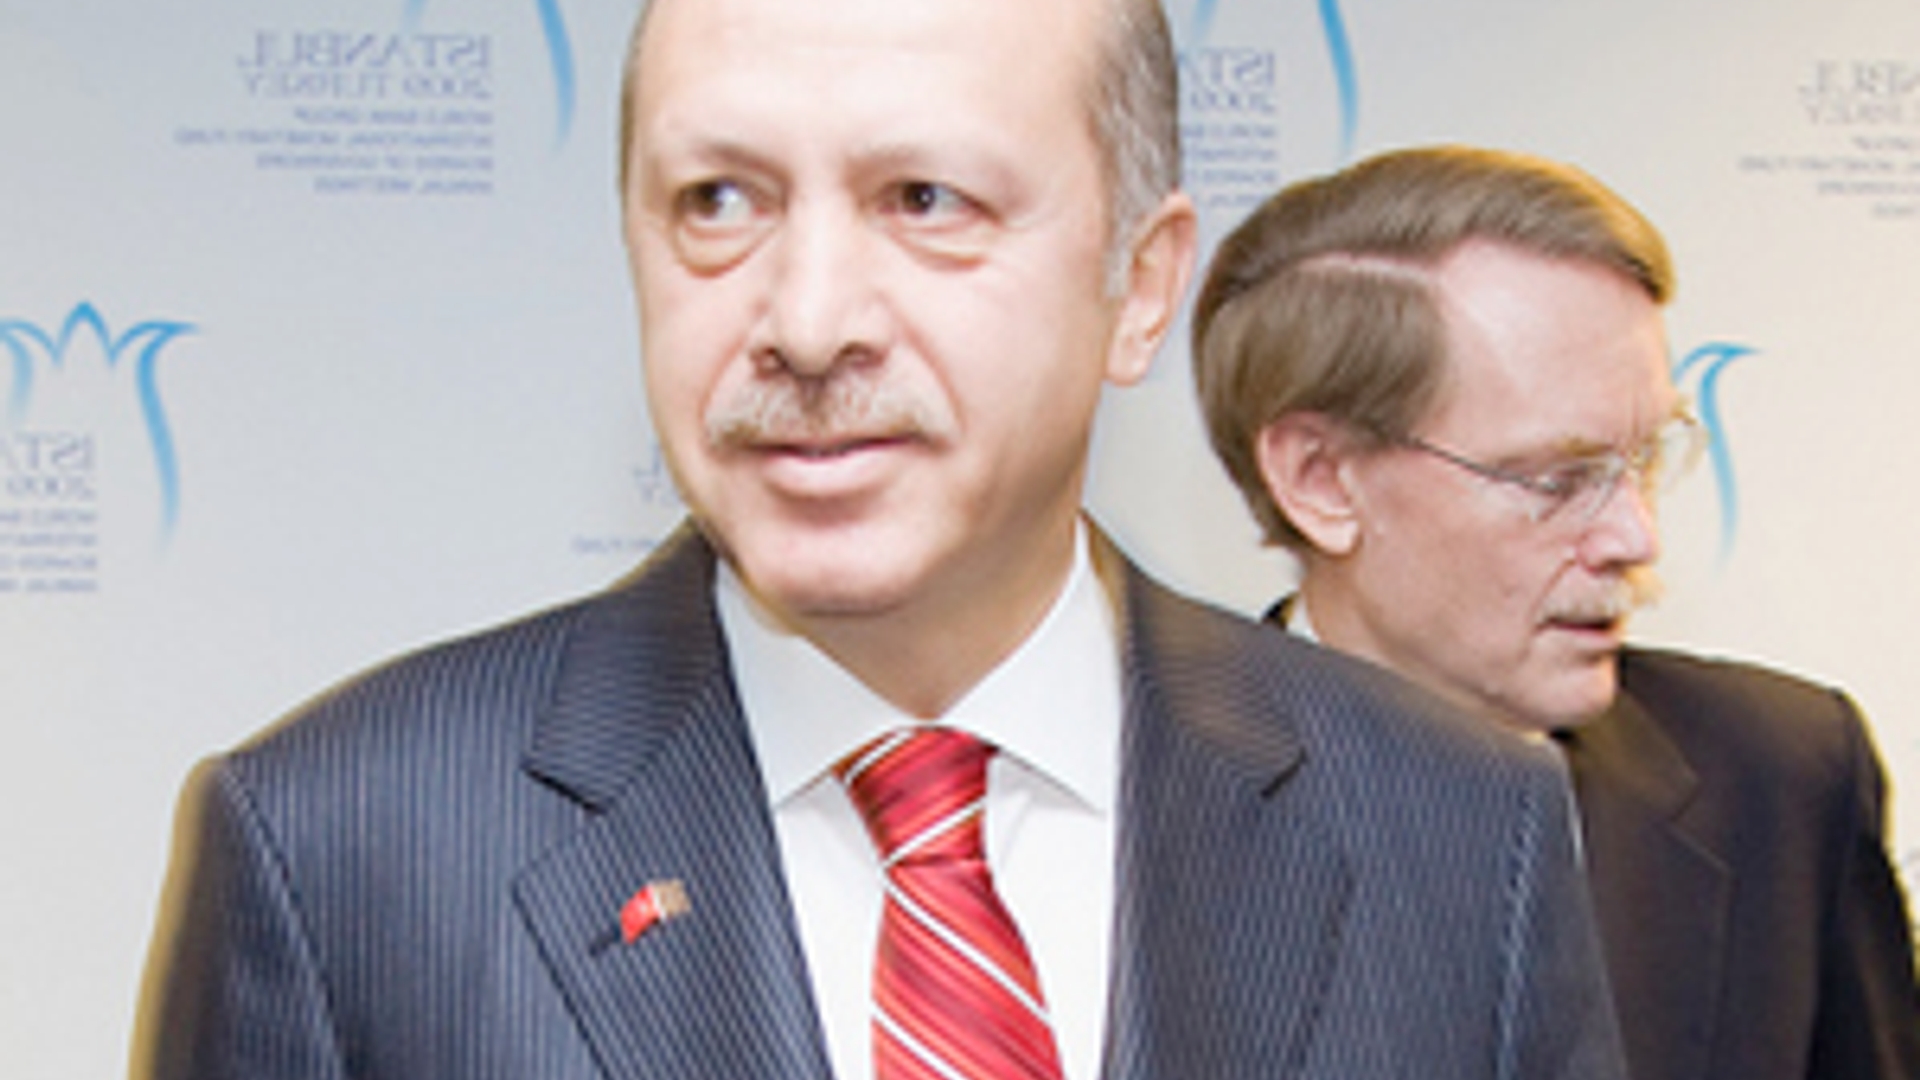 Erdogan-300.jpg